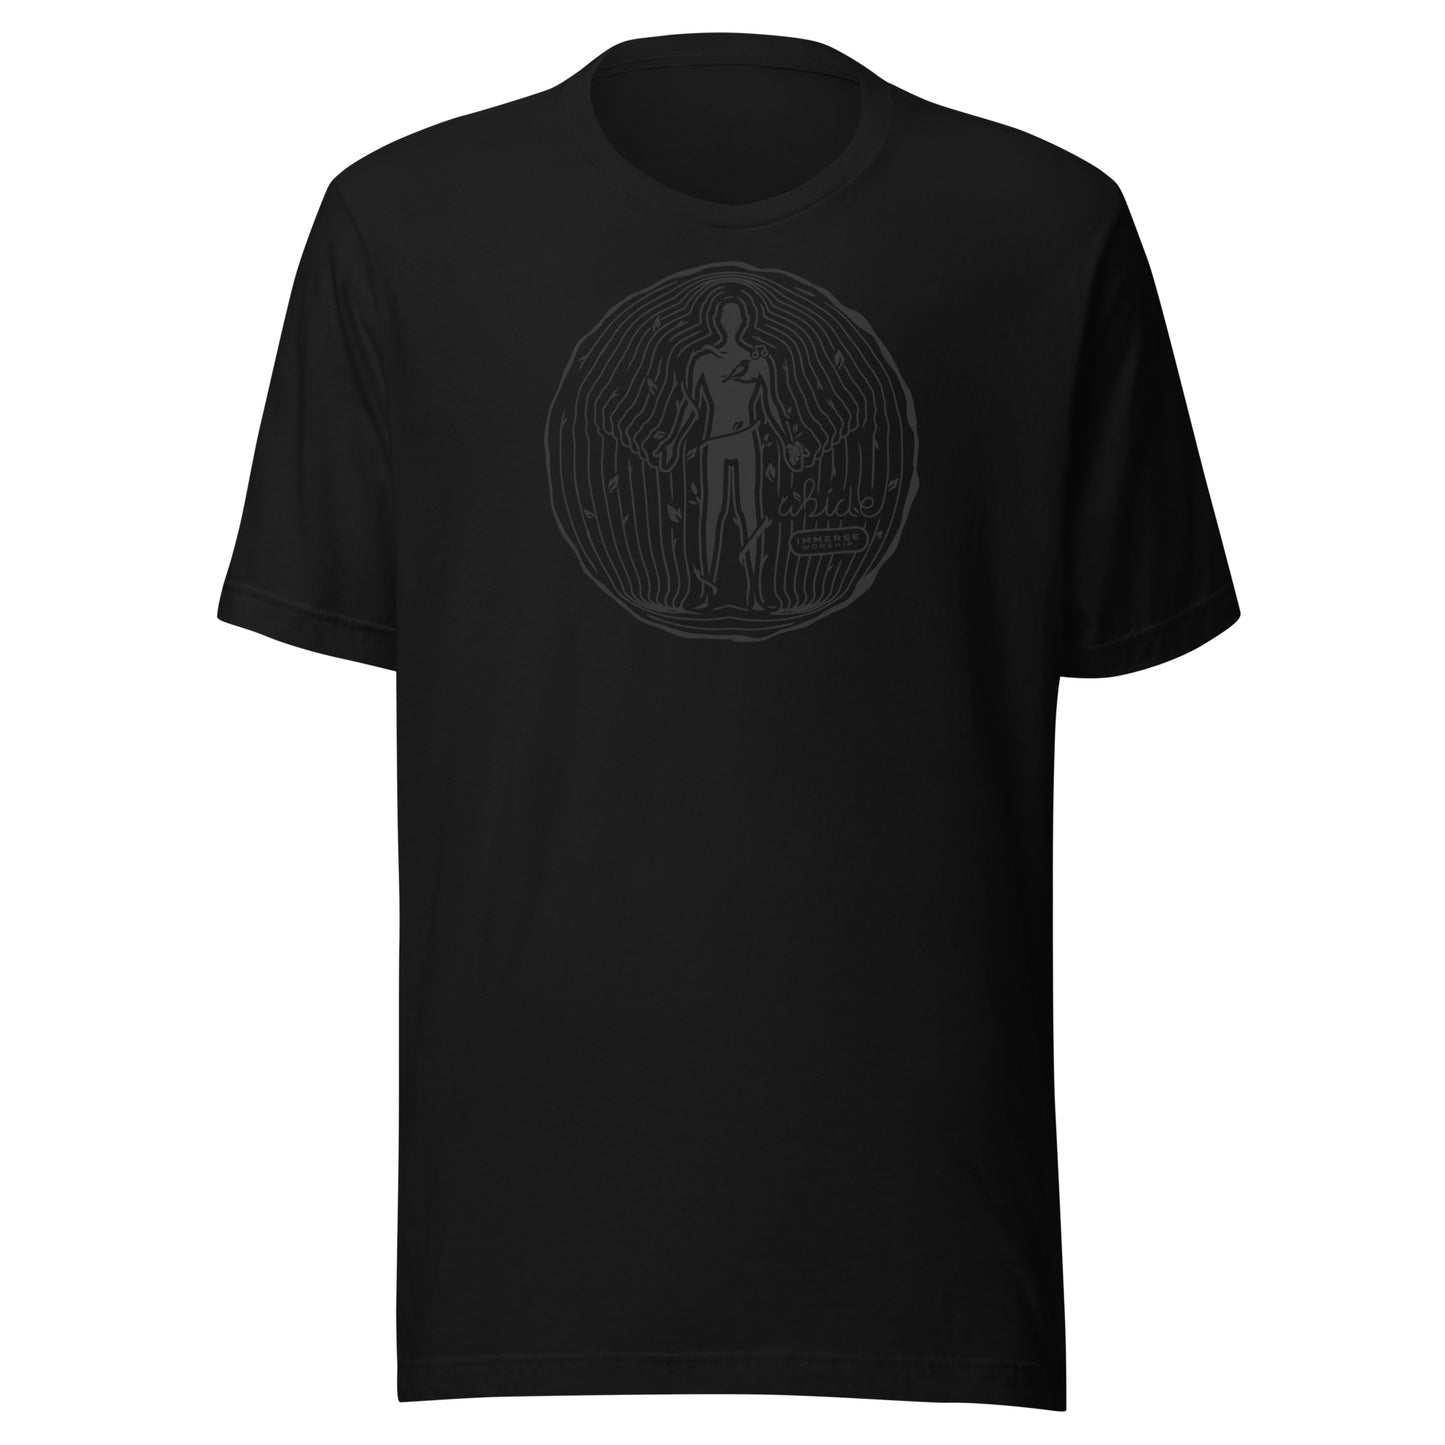 Abide - Immerse Worship T-Shirt